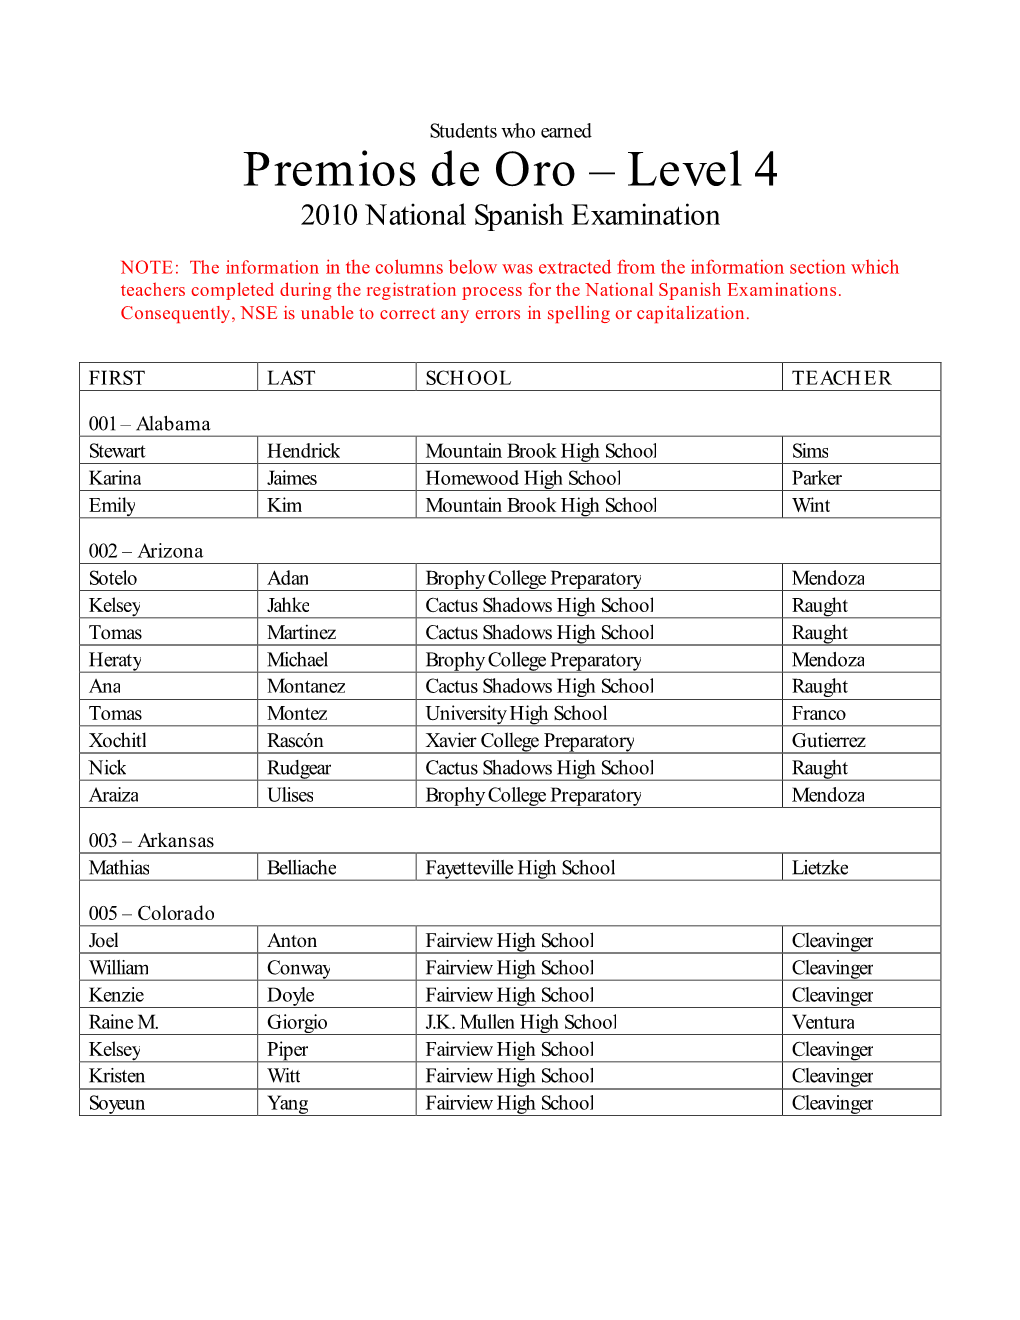 Premios De Oro – Level 4 2010 National Spanish Examination